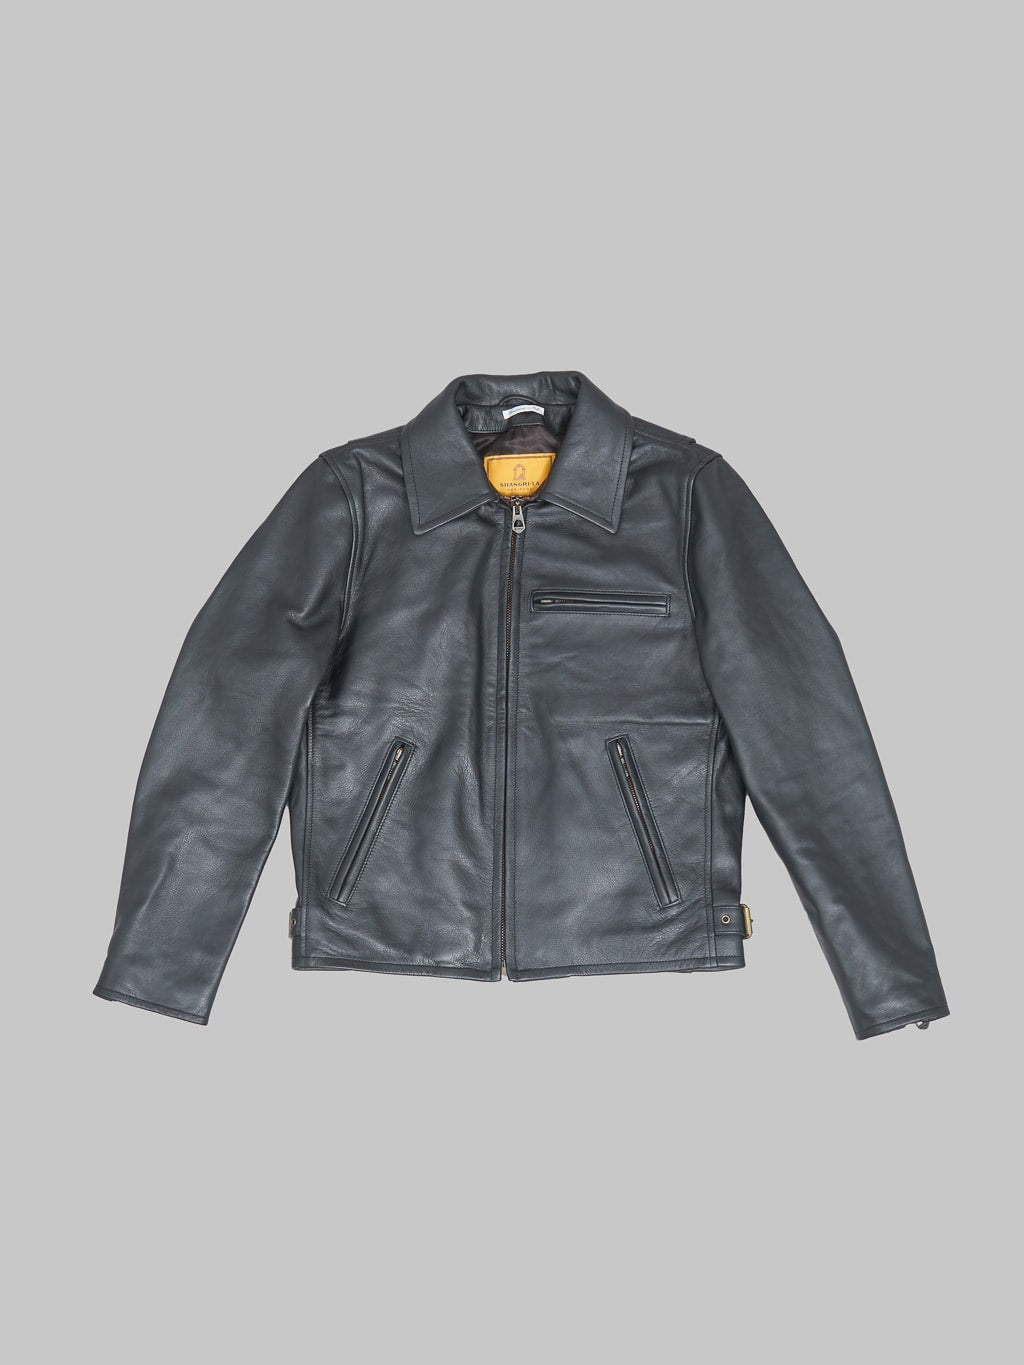 Shangri-La Heritage "Varenne" Black Leather Jacket